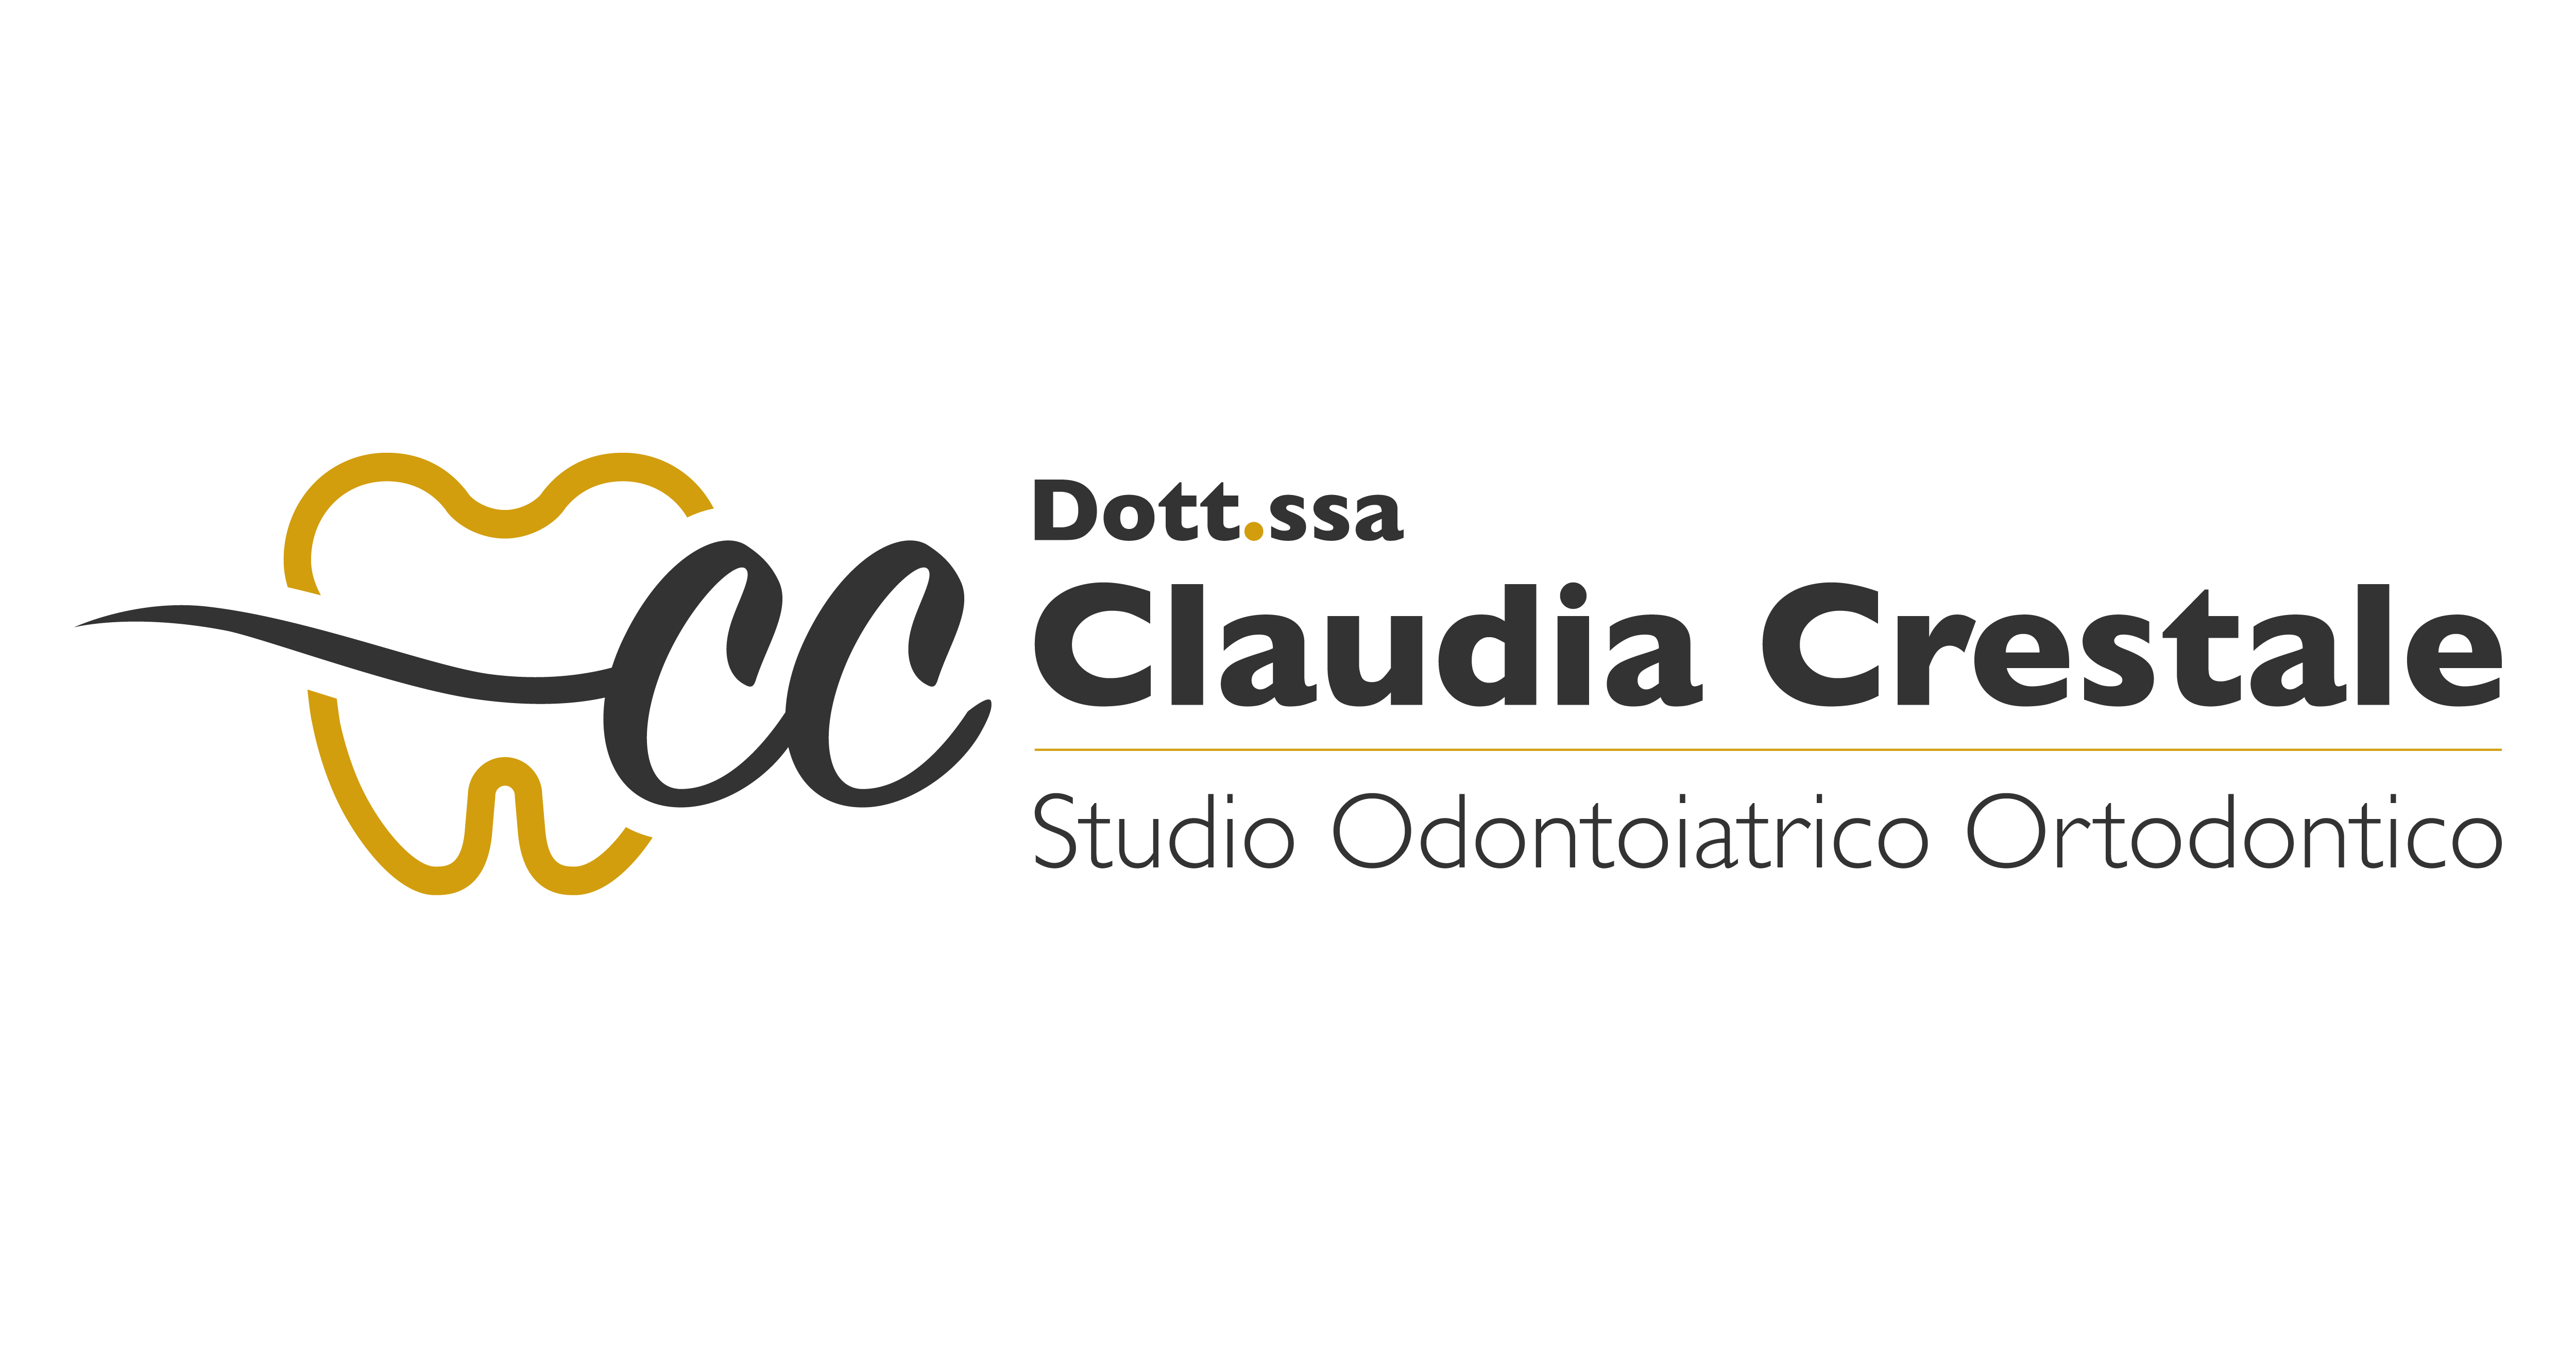 Dott.ssa Claudia Crestale | Studio Odontoiatrico Ortodontico